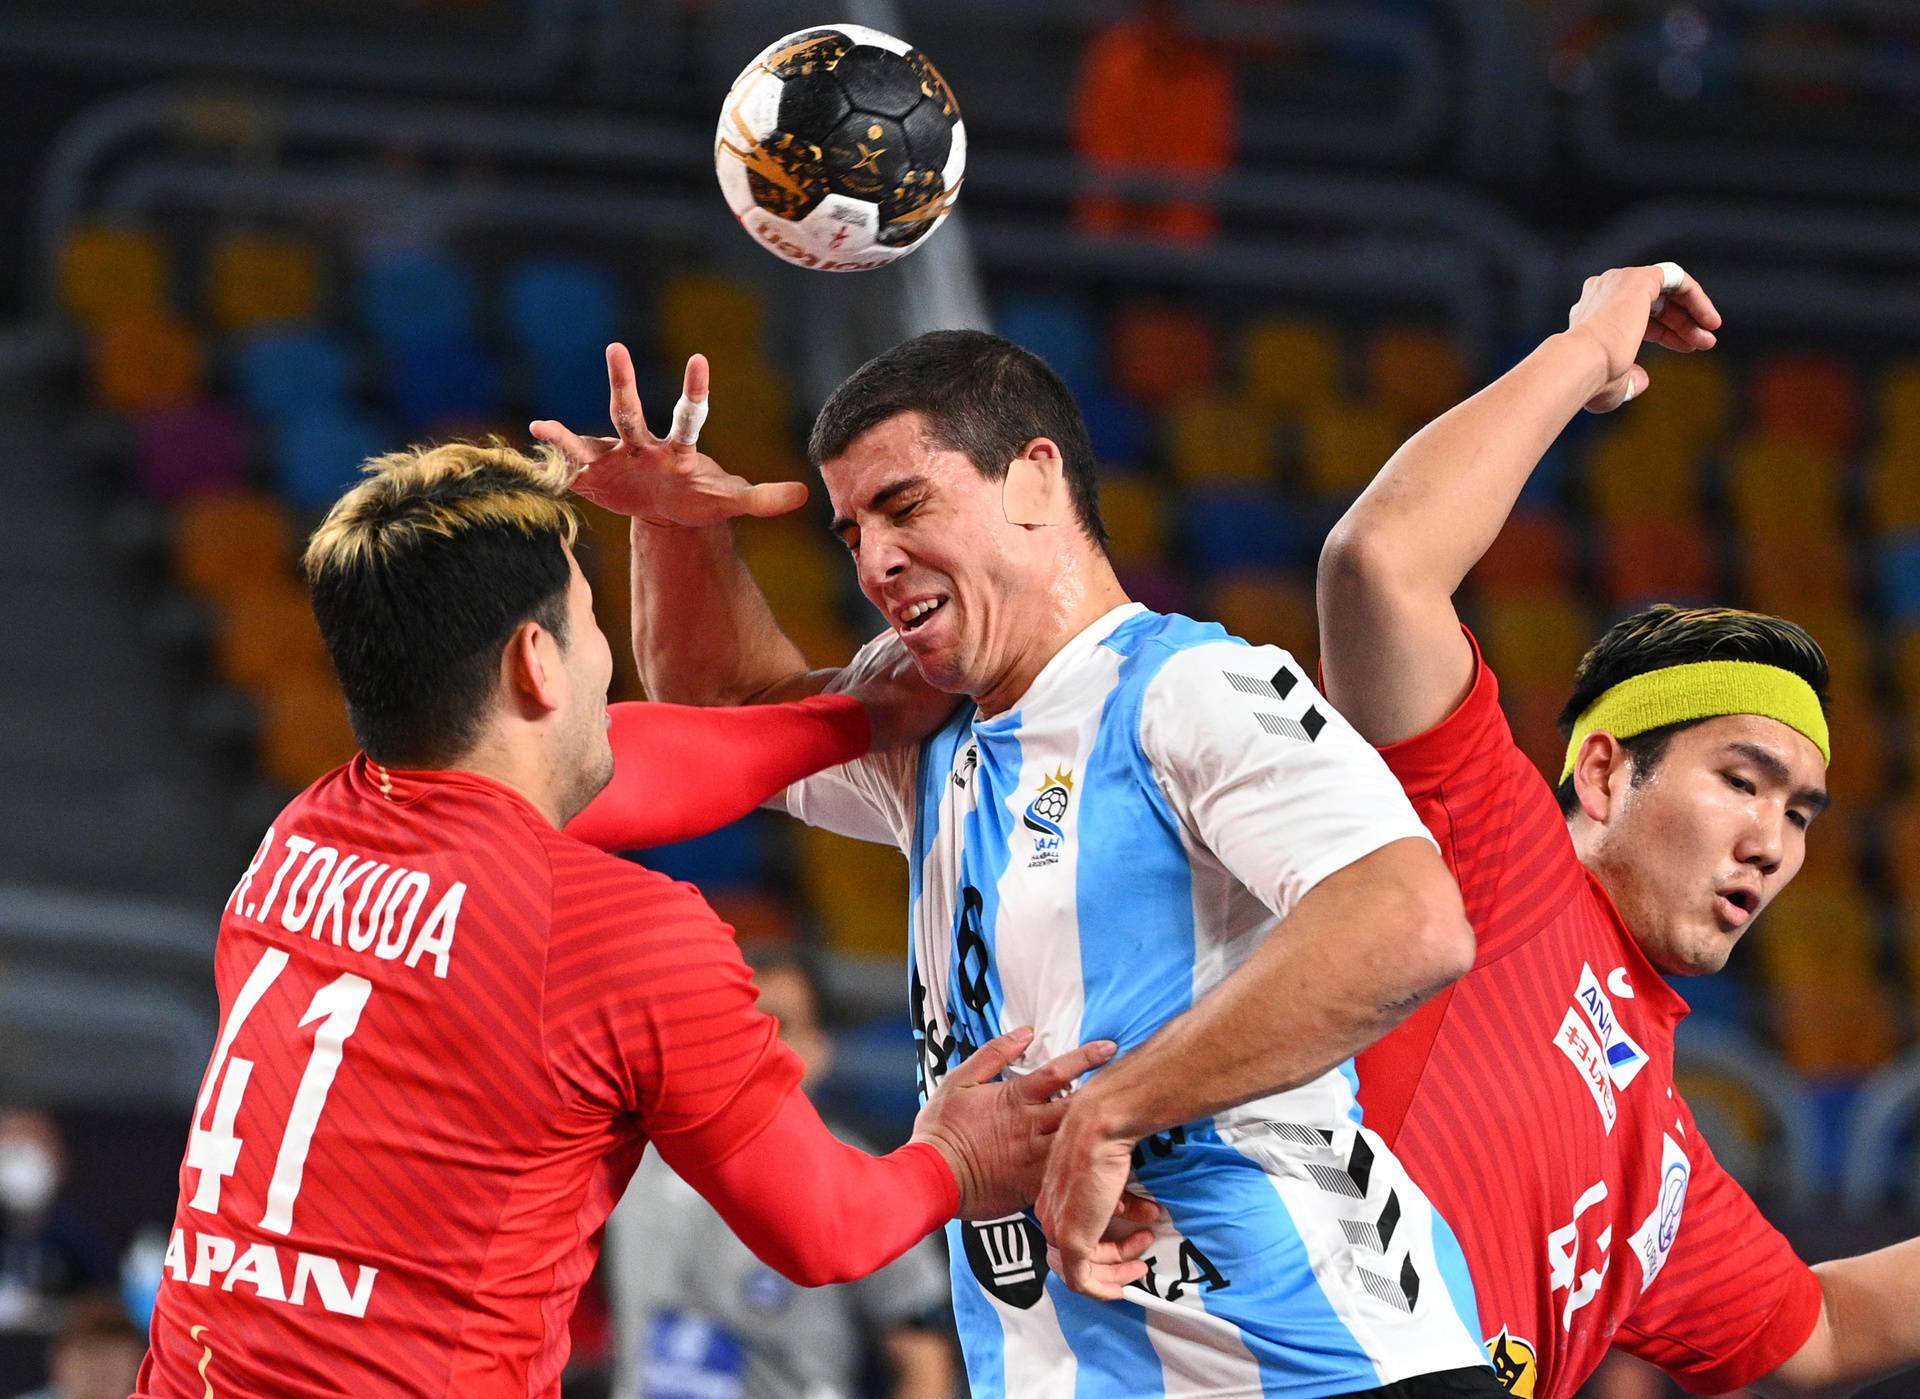 2021 IHF Handball World Championship - Main Round Group 2 - Japan v Argentina